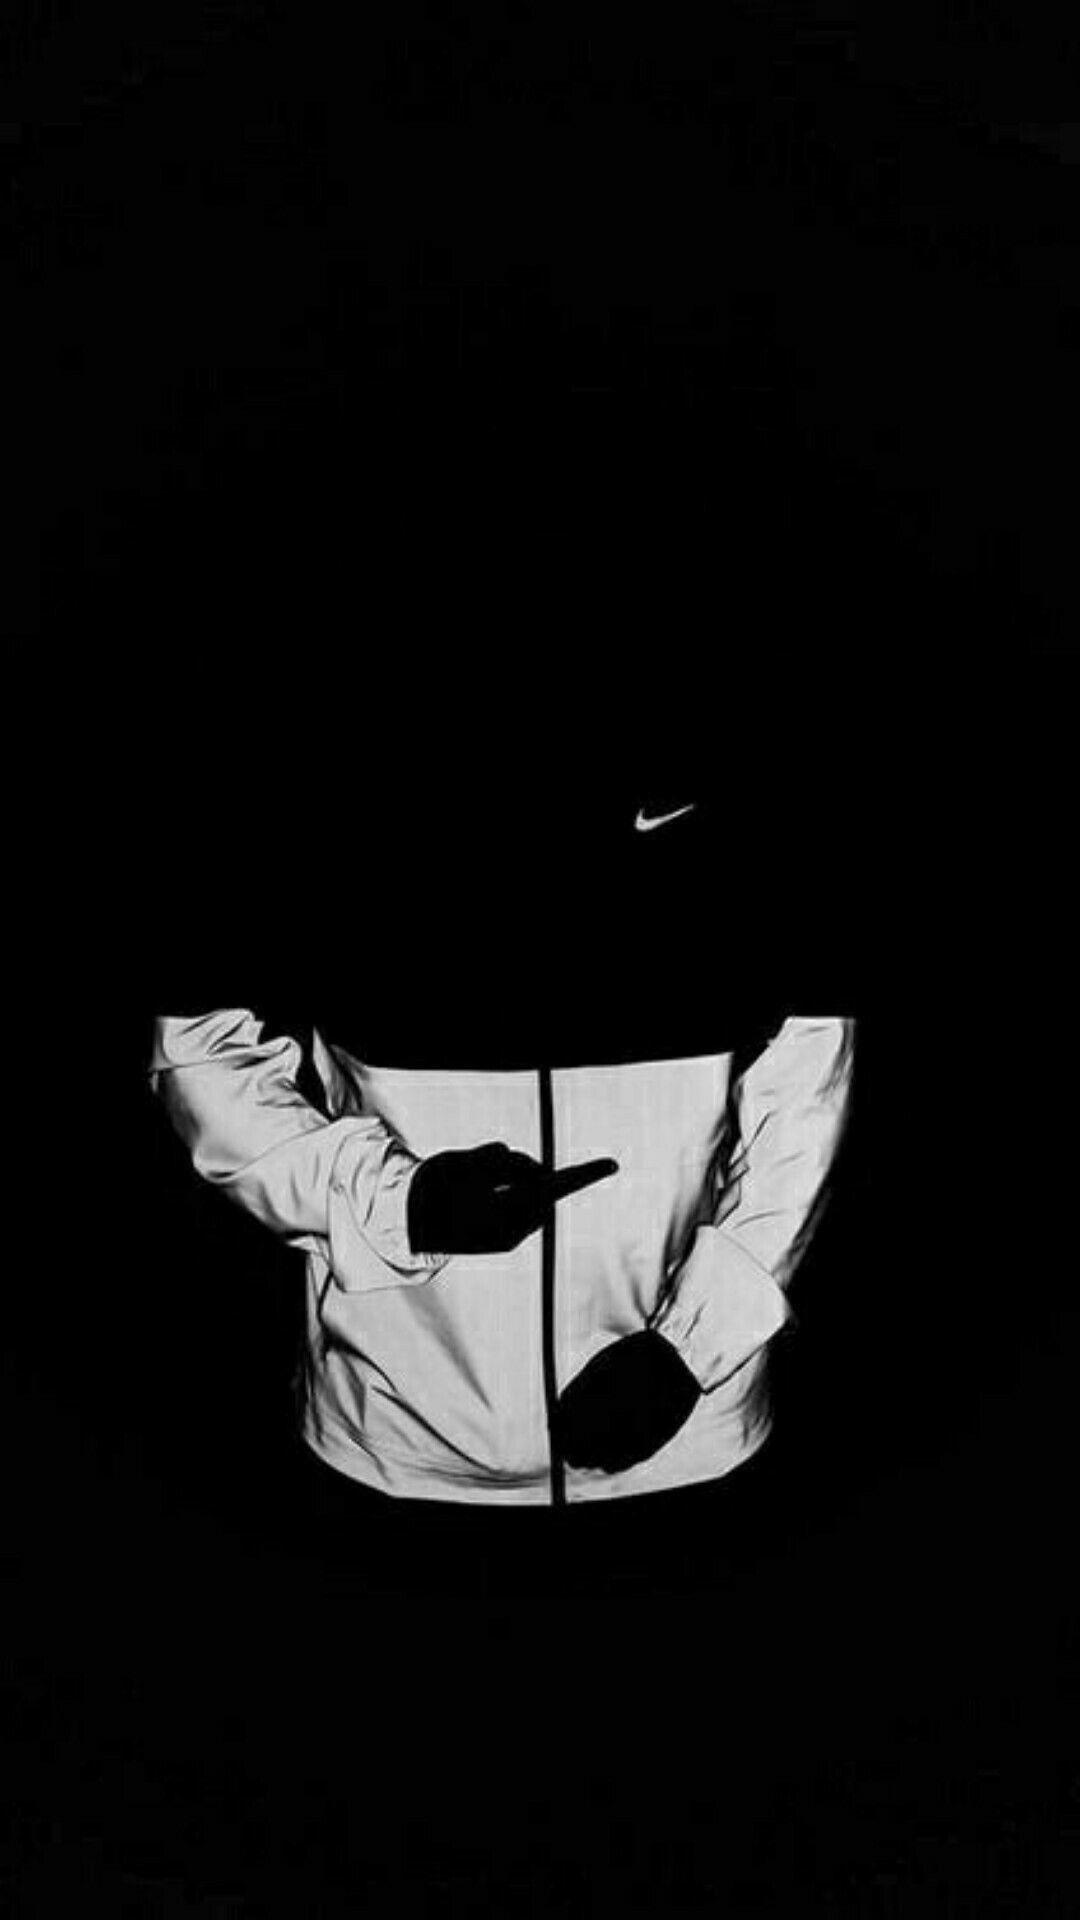 Black Nike Wallpaper. Nike